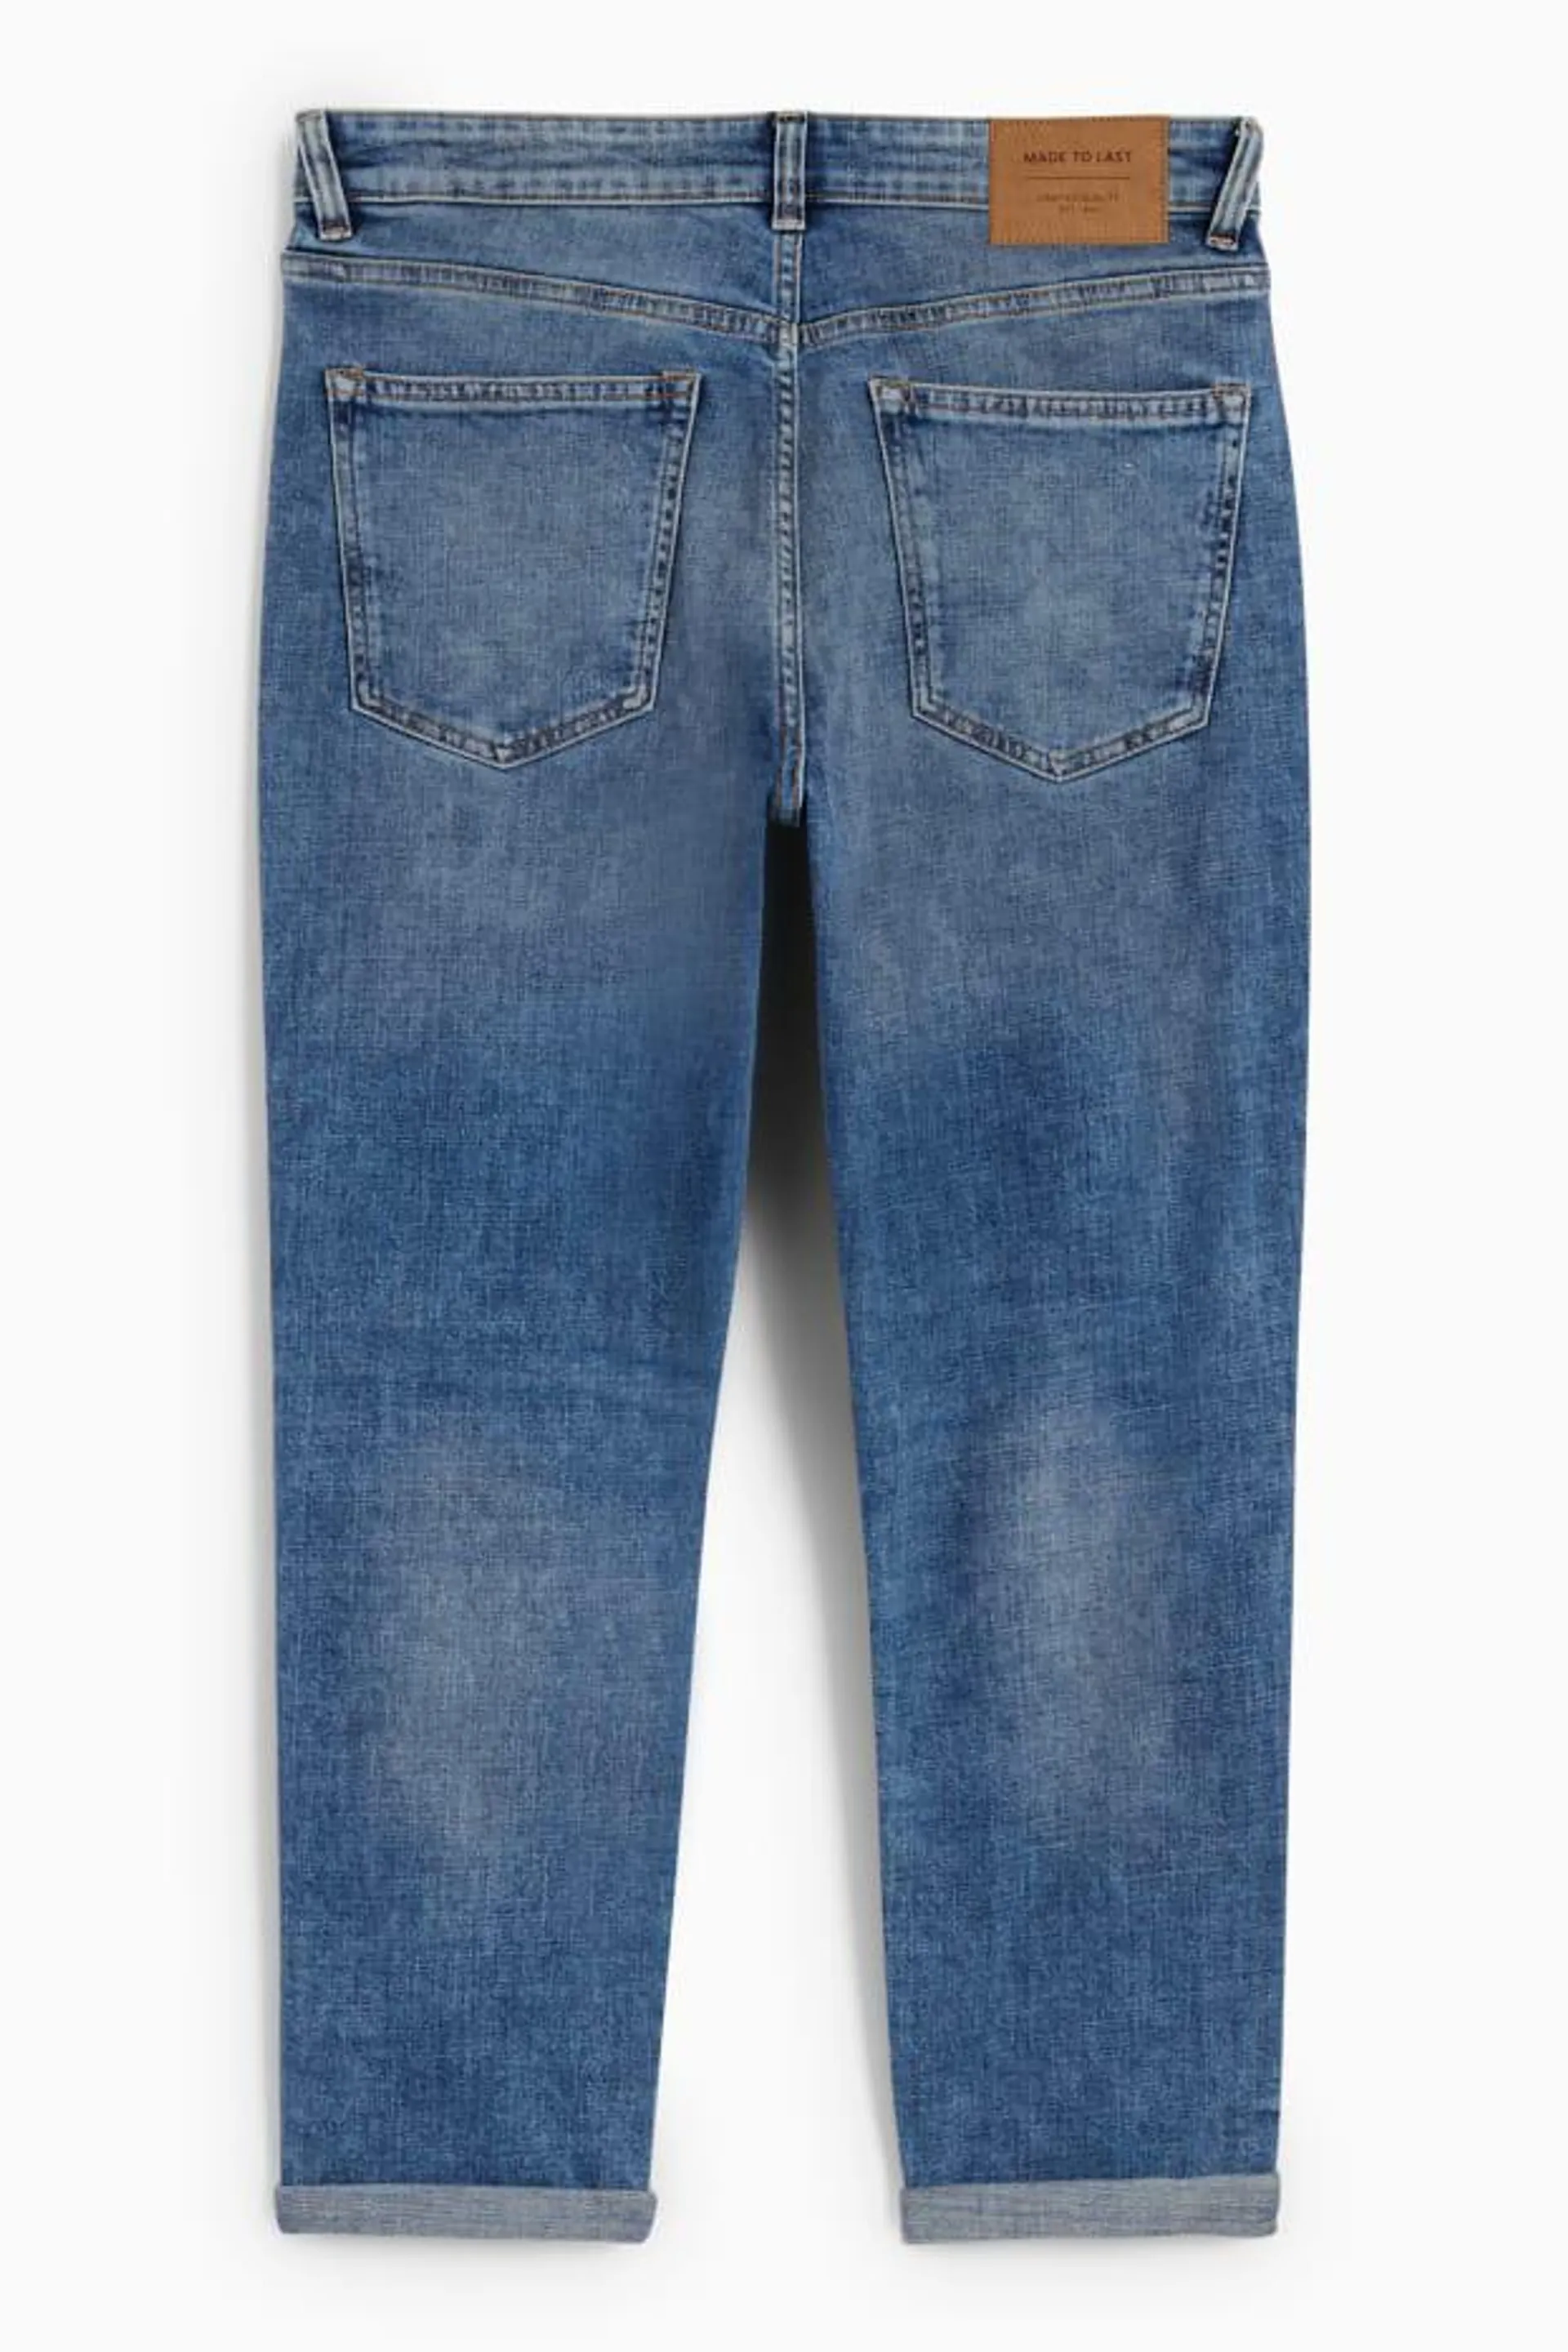 Boyfriend jeans - mid-rise waist